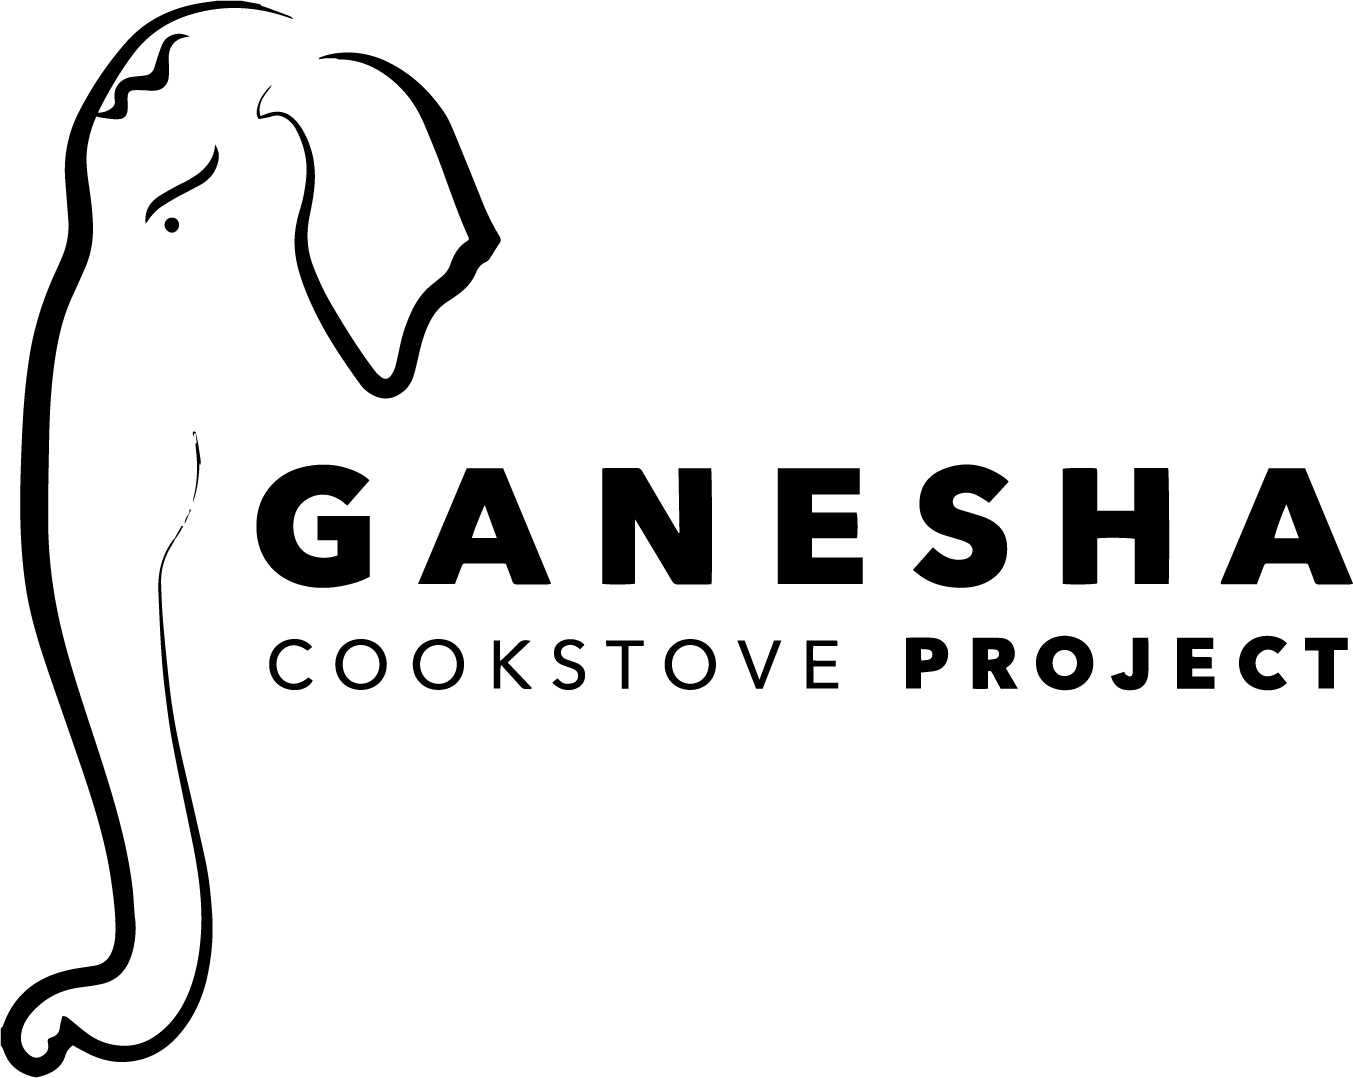 Ganesha Cookstove Project